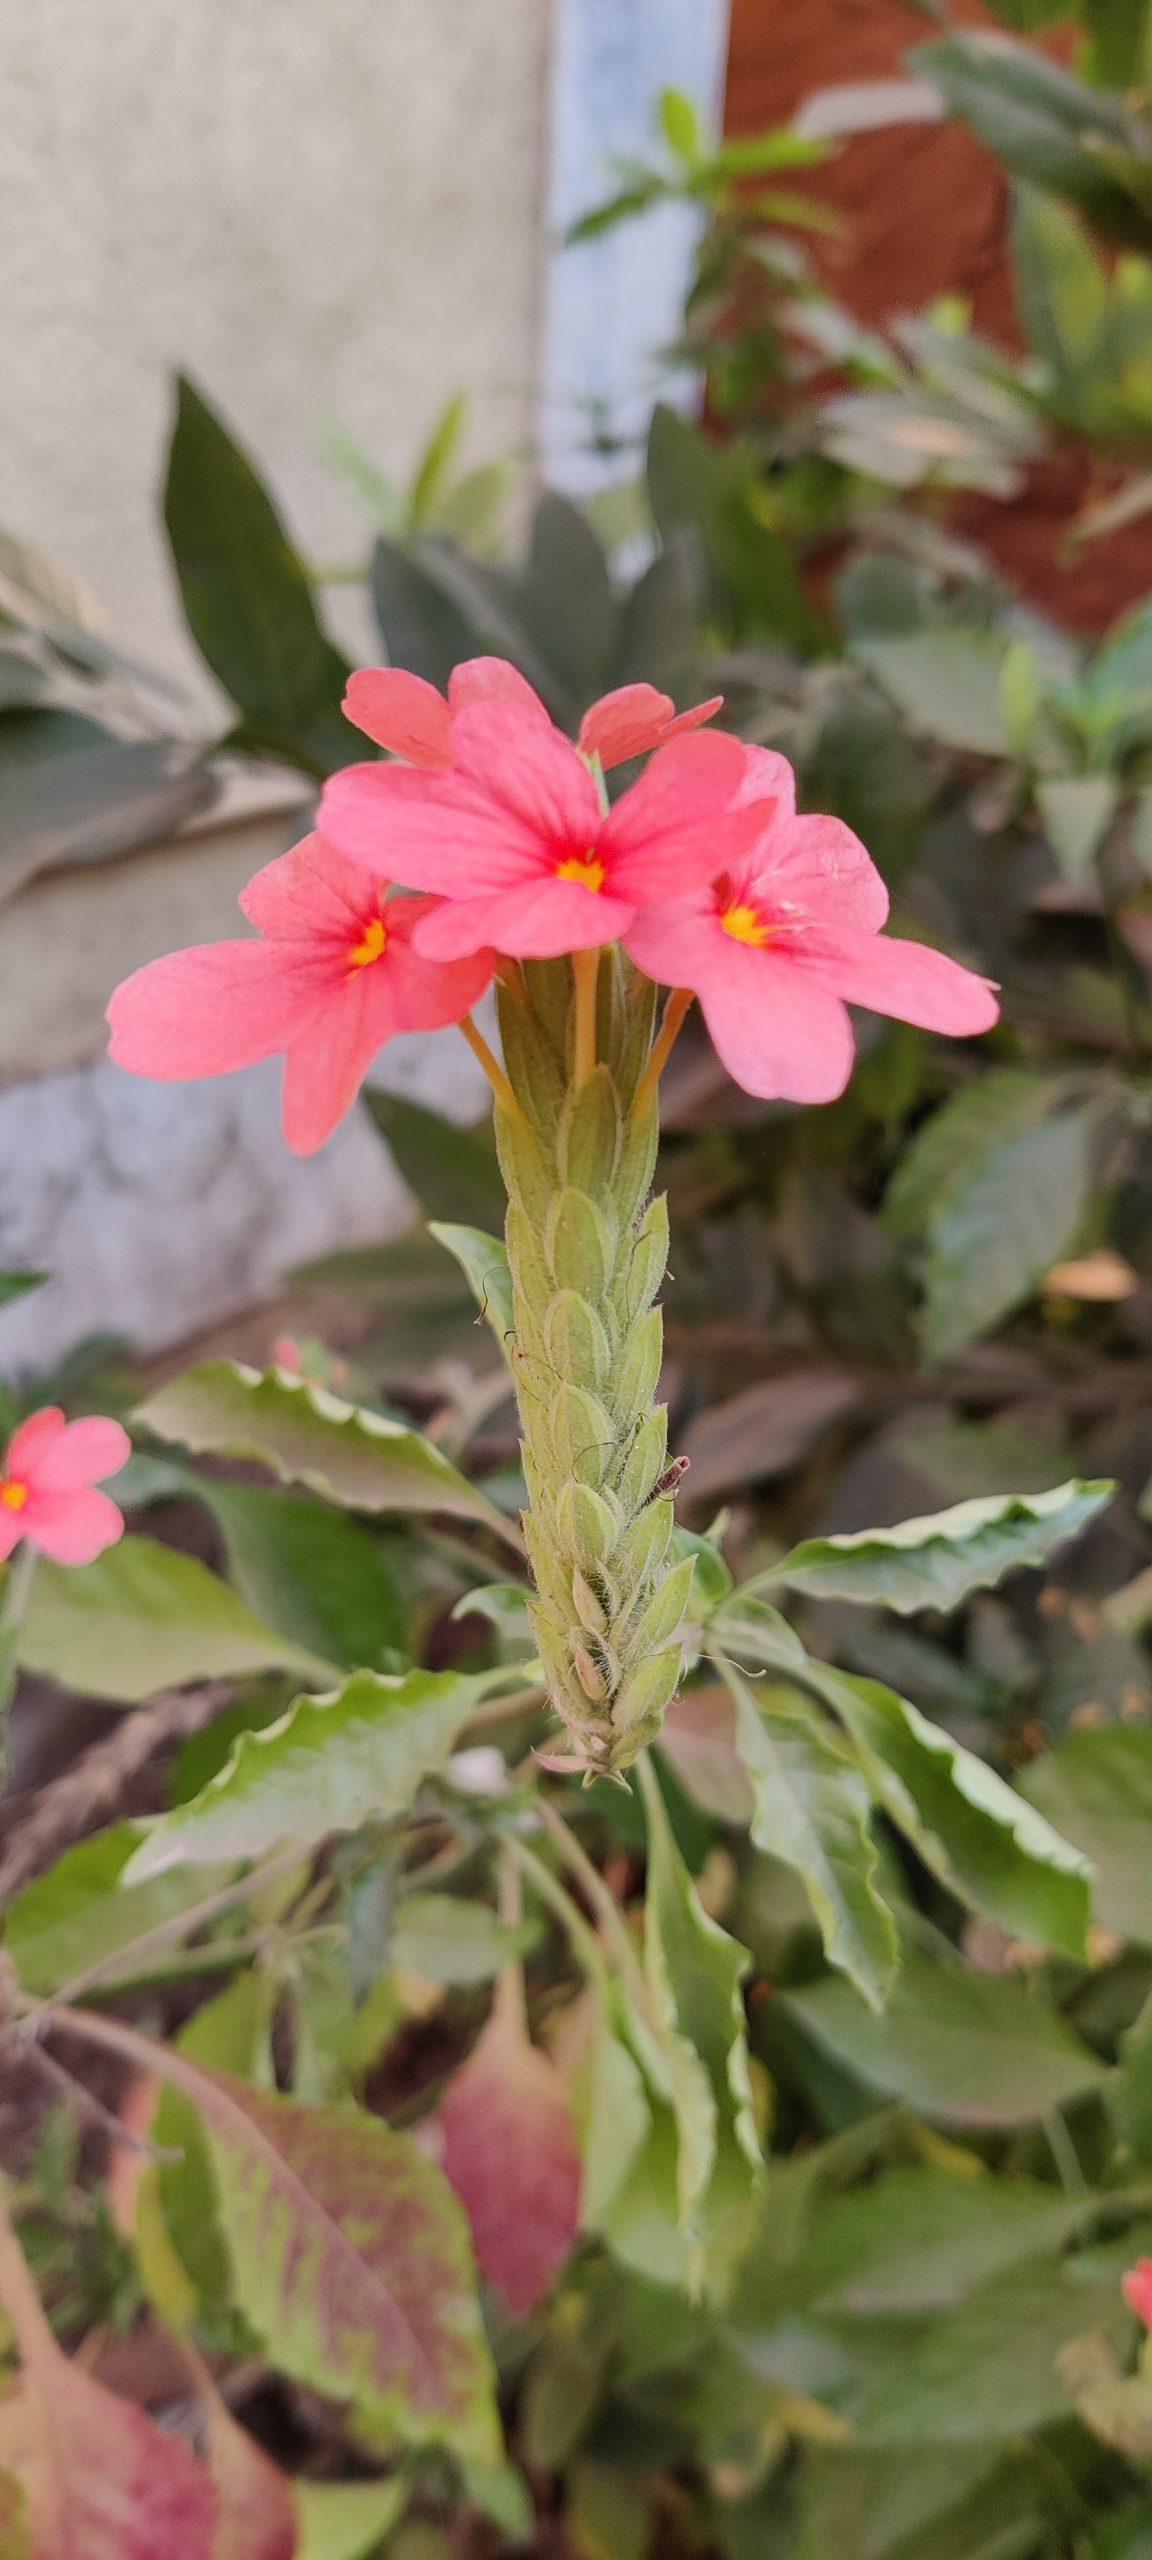 Flower on plant